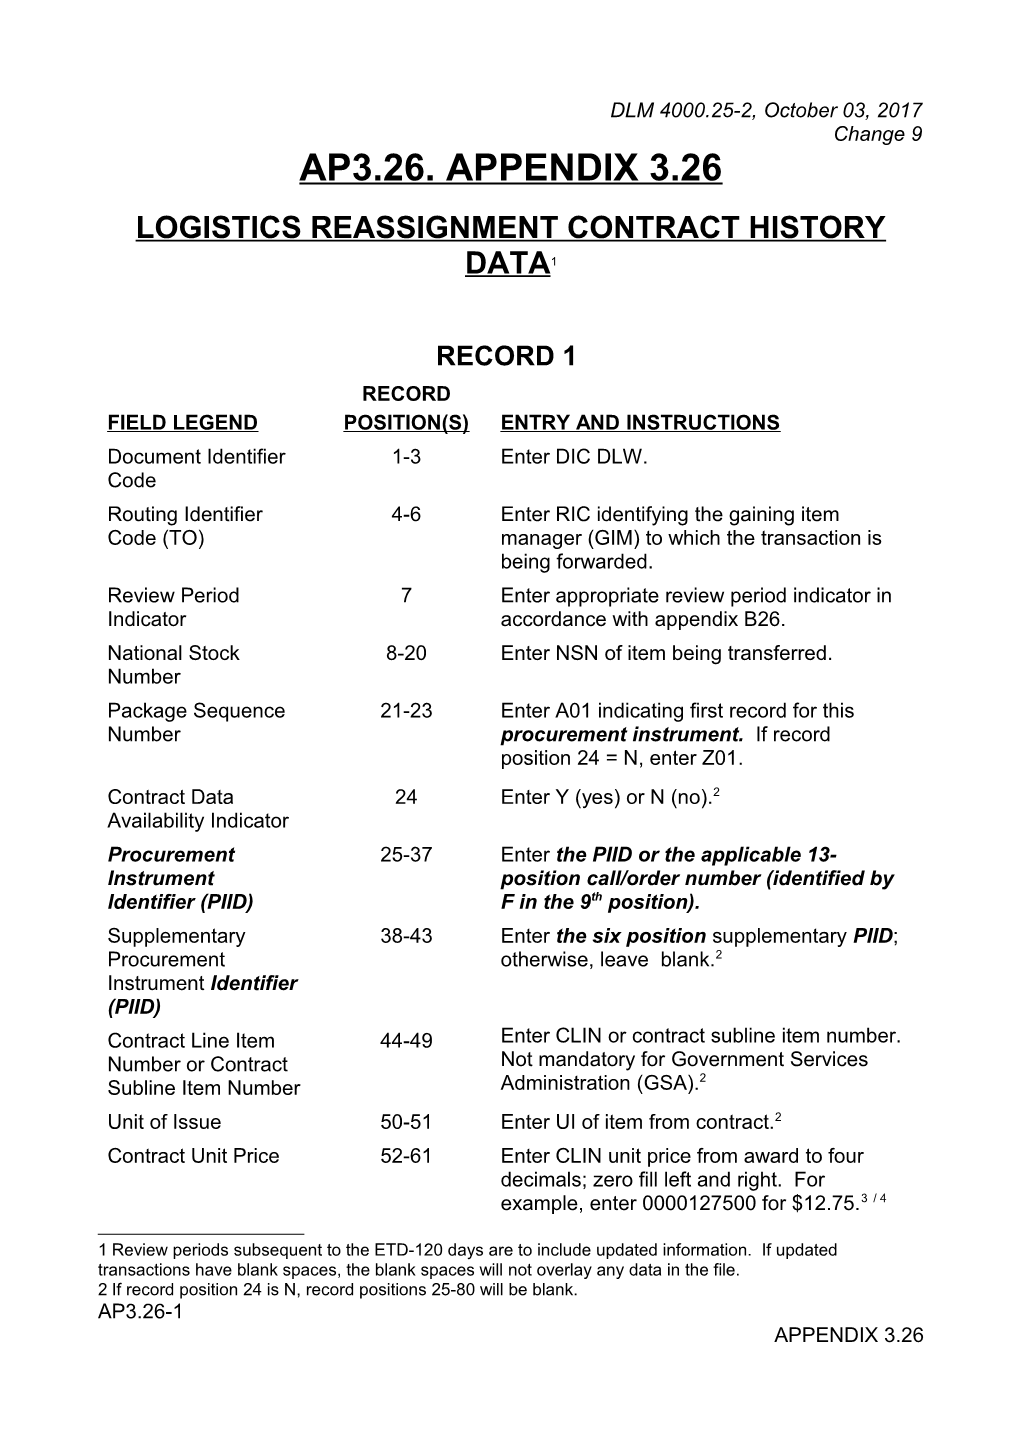 MILSTRAP AP3.26, DLW, Logistics Reassignment Contract History Data